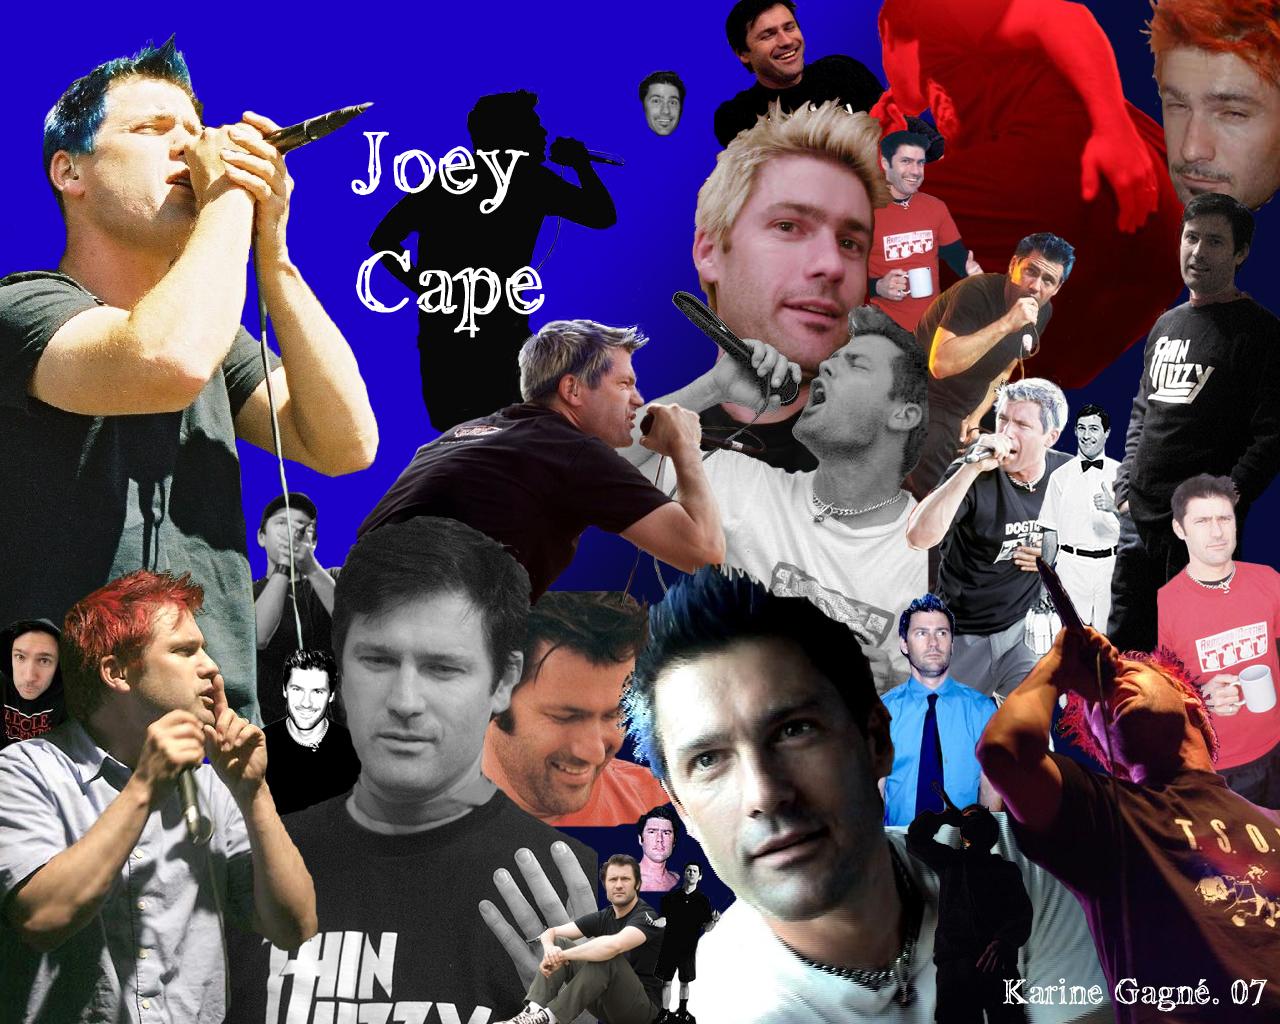 Joey cape